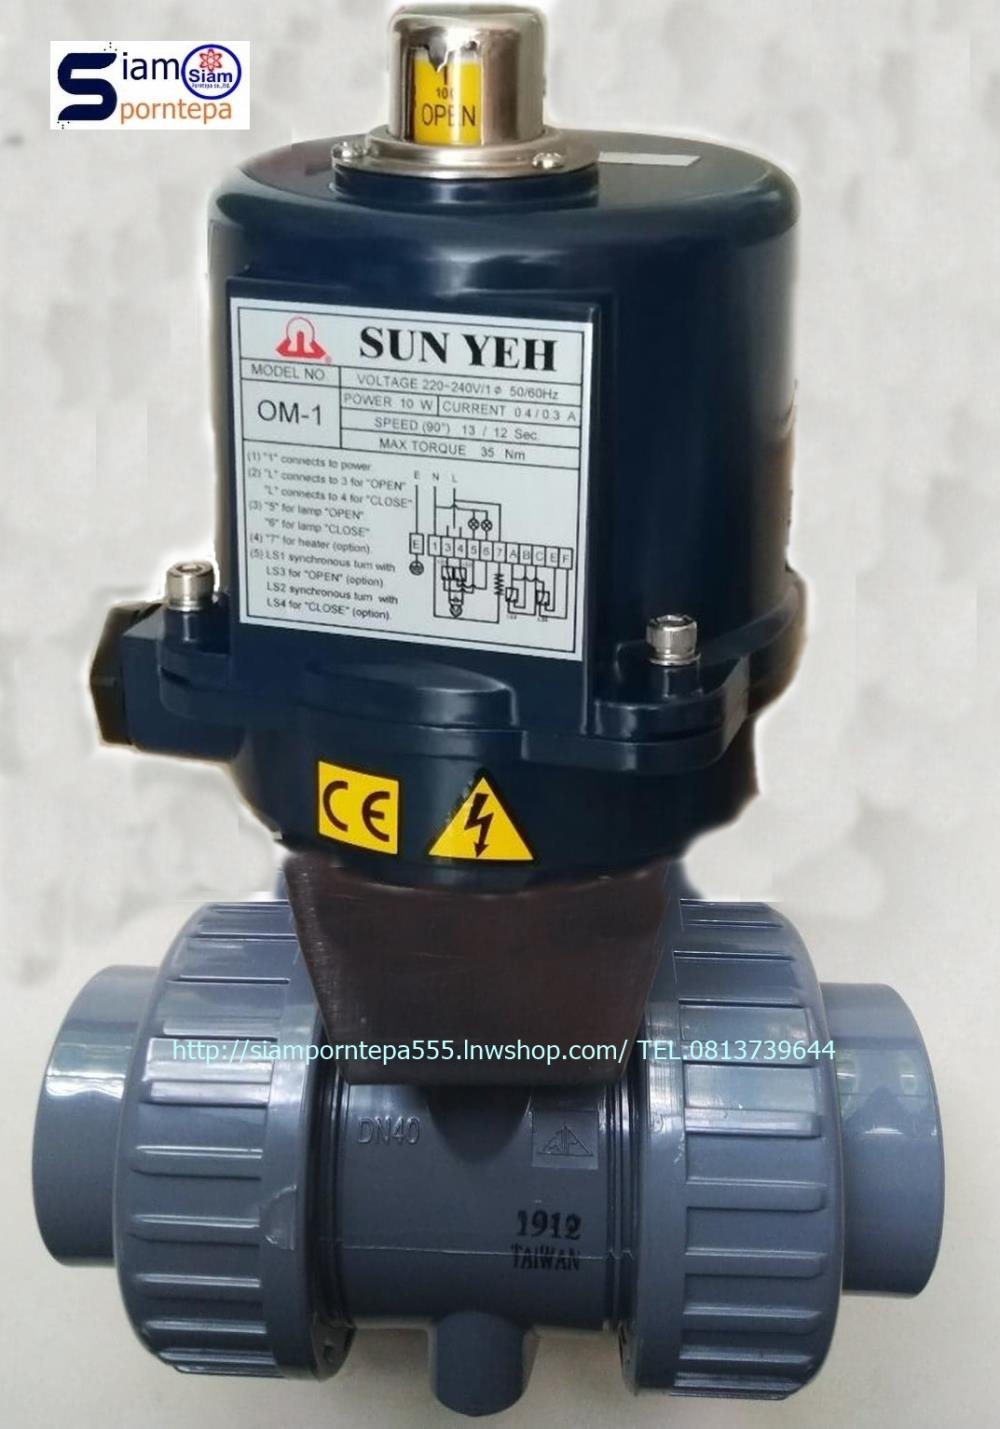 UPVC-2"-OM1-24DC UPVC ball valve แบบสวม size 2"ใช้งานร่วมกับ หัวขับไฟฟ้า Sunyeh OM1-24DC ใช้งานกับกลุ่มงาน เคมีต่างๆ ส่งฟรีทั่วประเทศ,UPVC-2"-OM1-24DC UPVC ball valve แบบสวม size 2",UPVC ball valve แบบสวม size 2"ใช้งานร่วมกับ หัวขับไฟฟ้า Sunyeh ,UPVC-2"-OM1-24DC UPVC ball valve แบบสวม size 2",Pumps, Valves and Accessories/Valves/Ball Valves